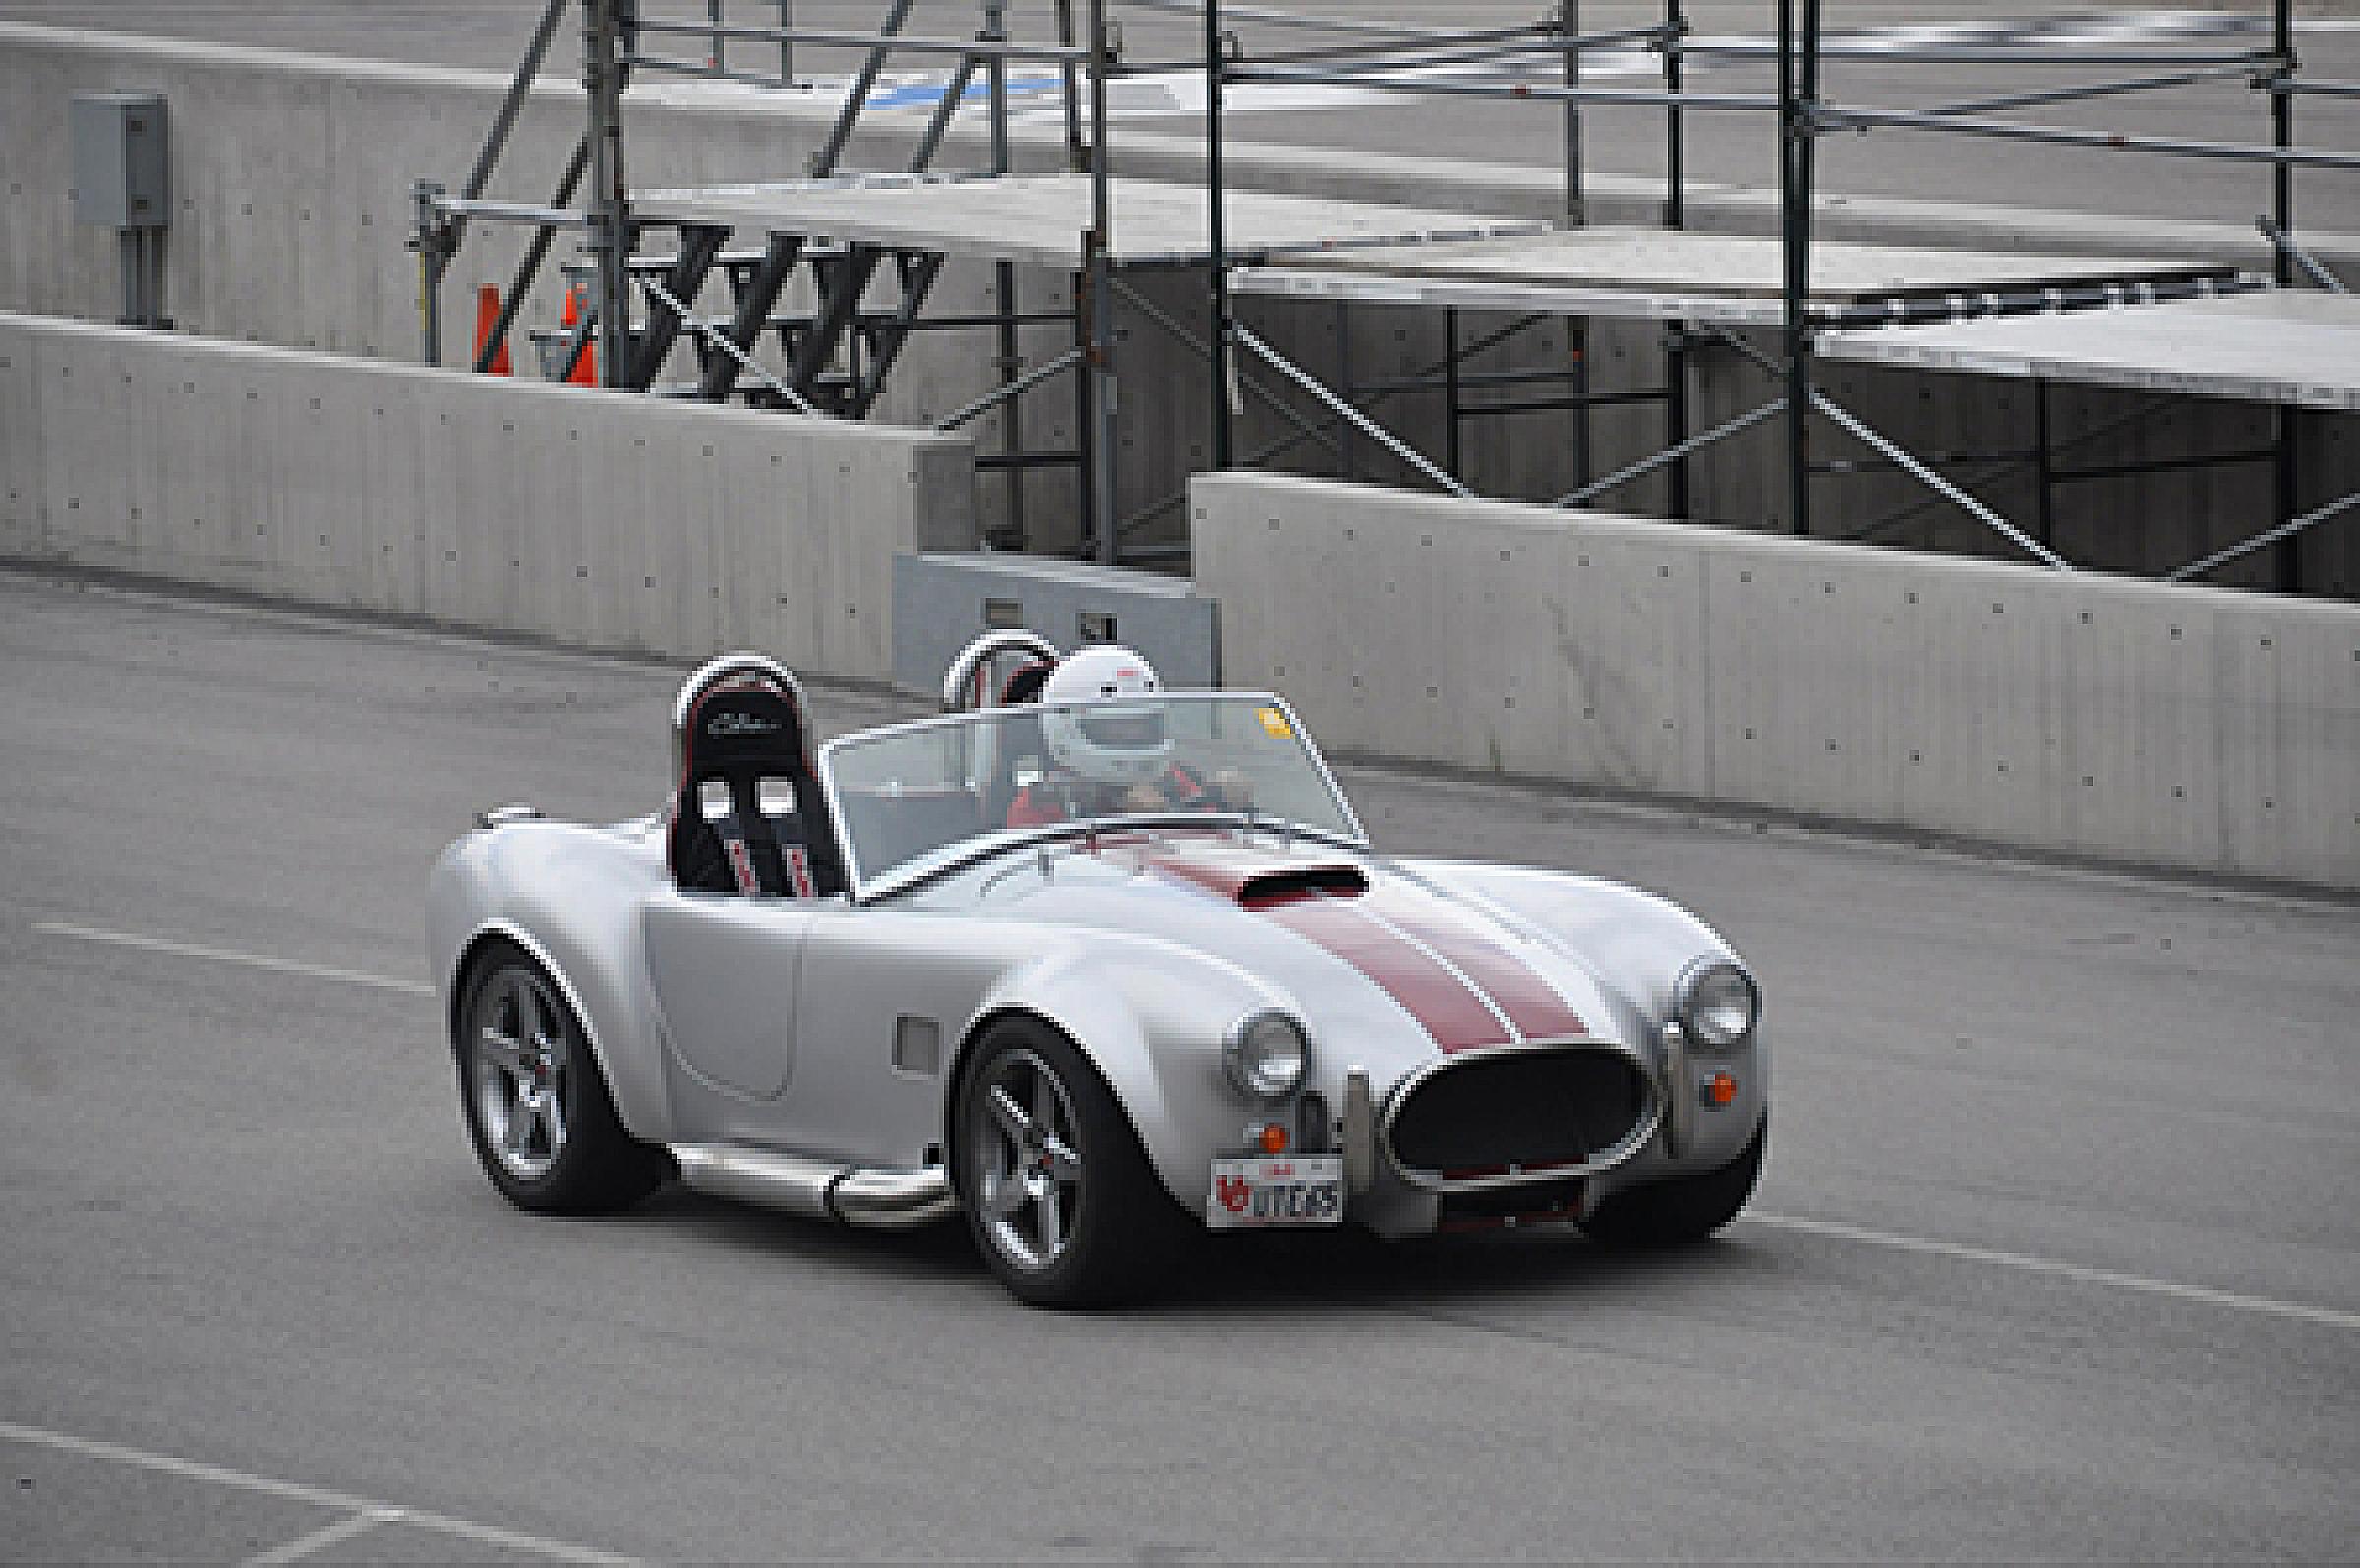 Randy Jensen driving a race car